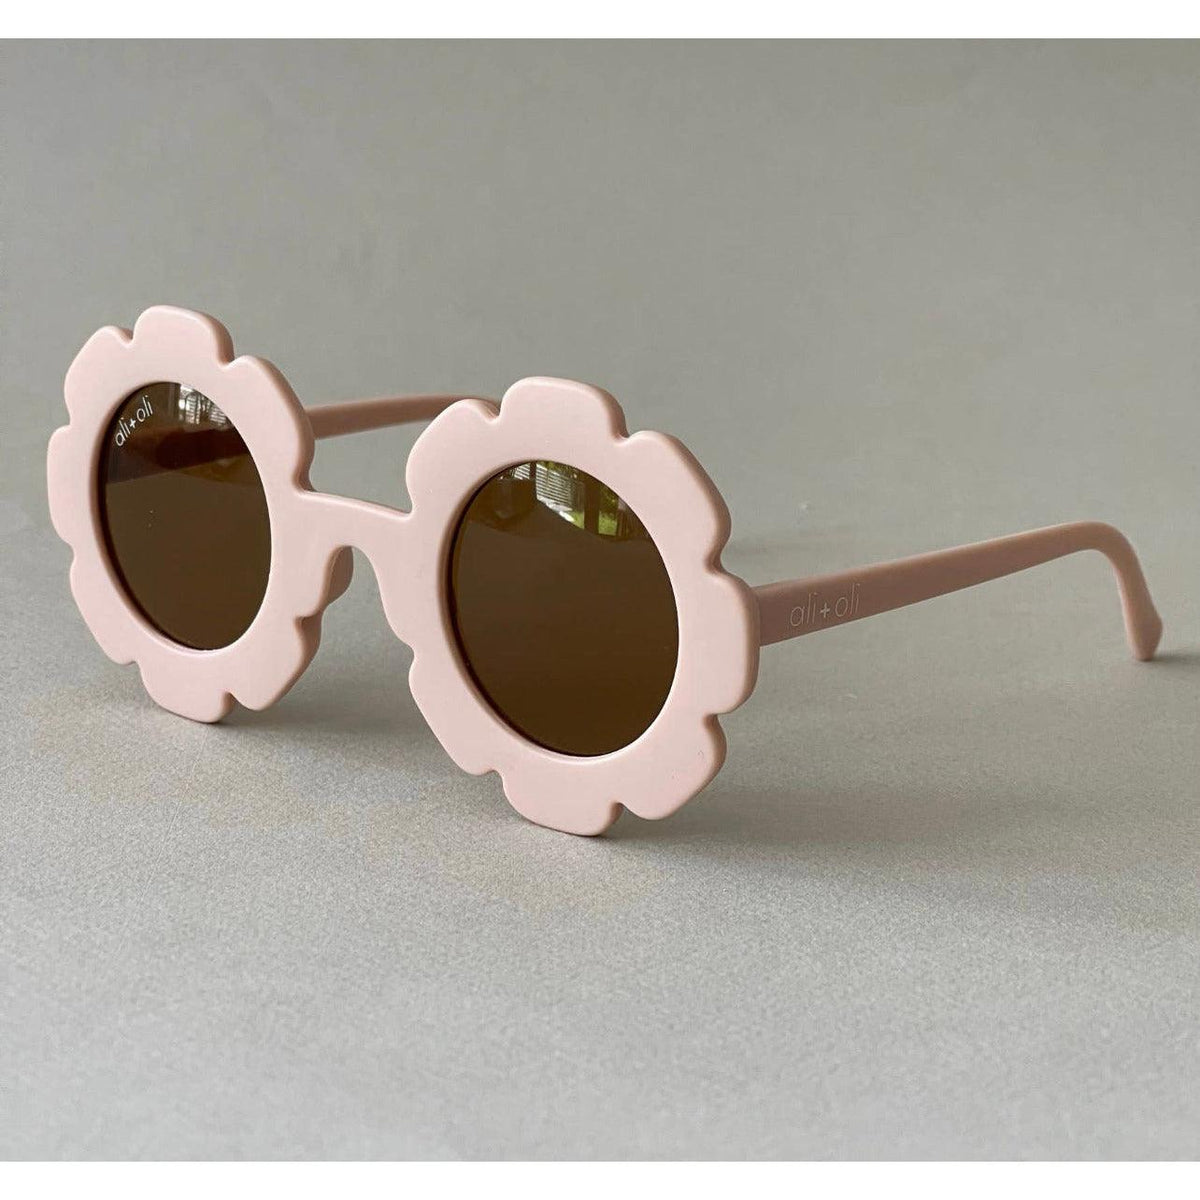 Ali + Oli | Kids Flower Power Sunglasses | Pink - becauseofadi